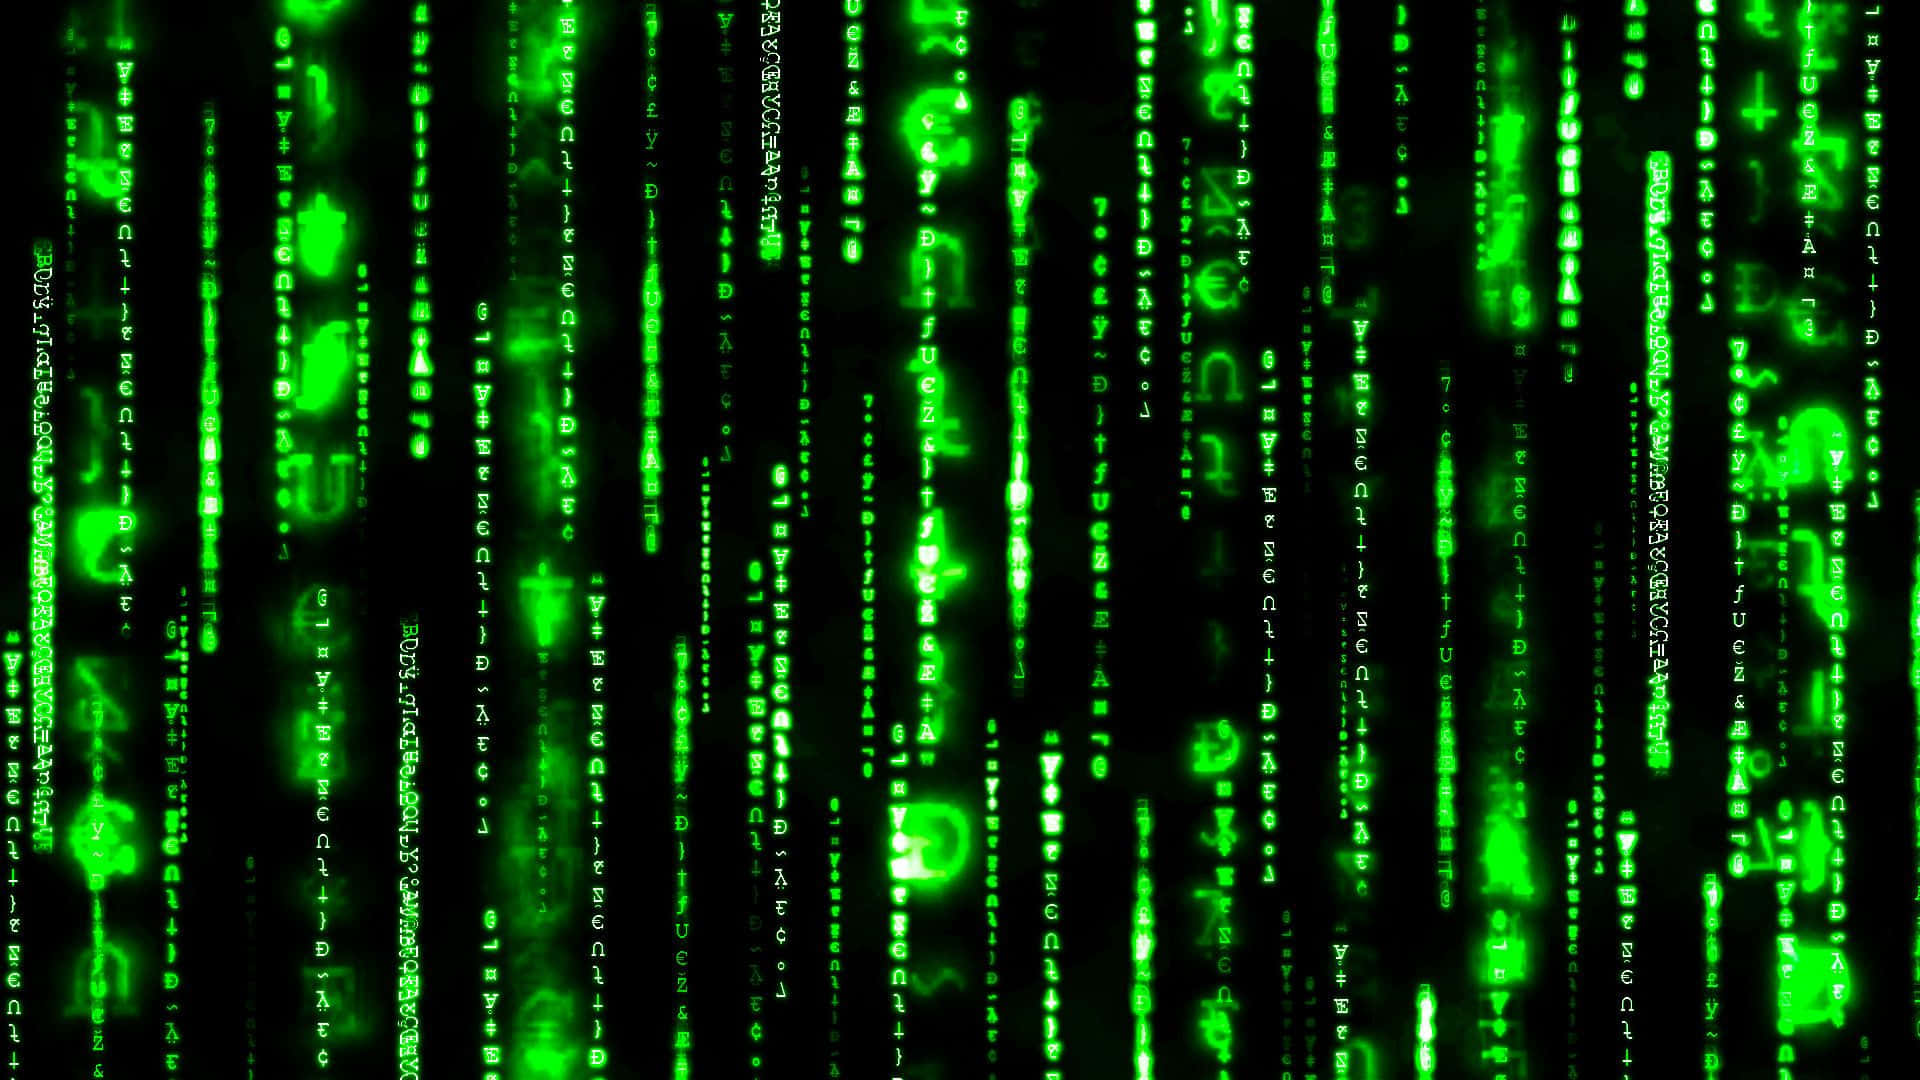 It's time to enter the Matrix! Wallpaper